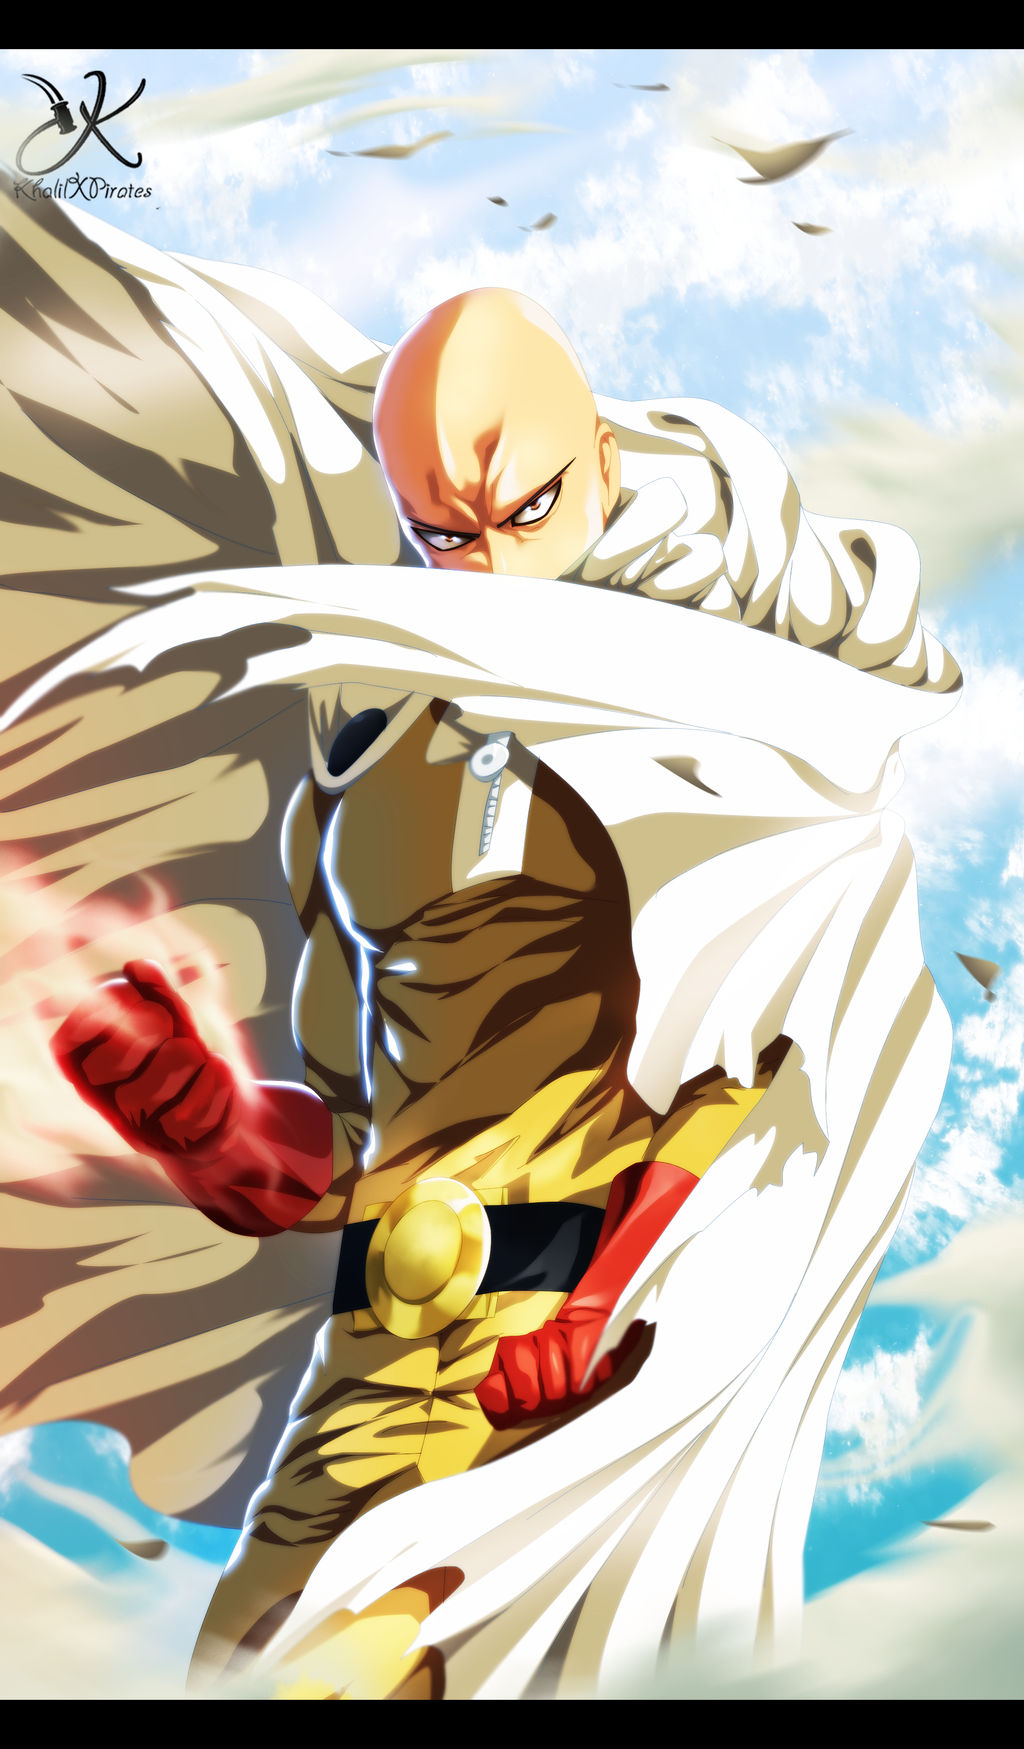 29 Saitama - One Punch Man by Koro-Senpai on DeviantArt